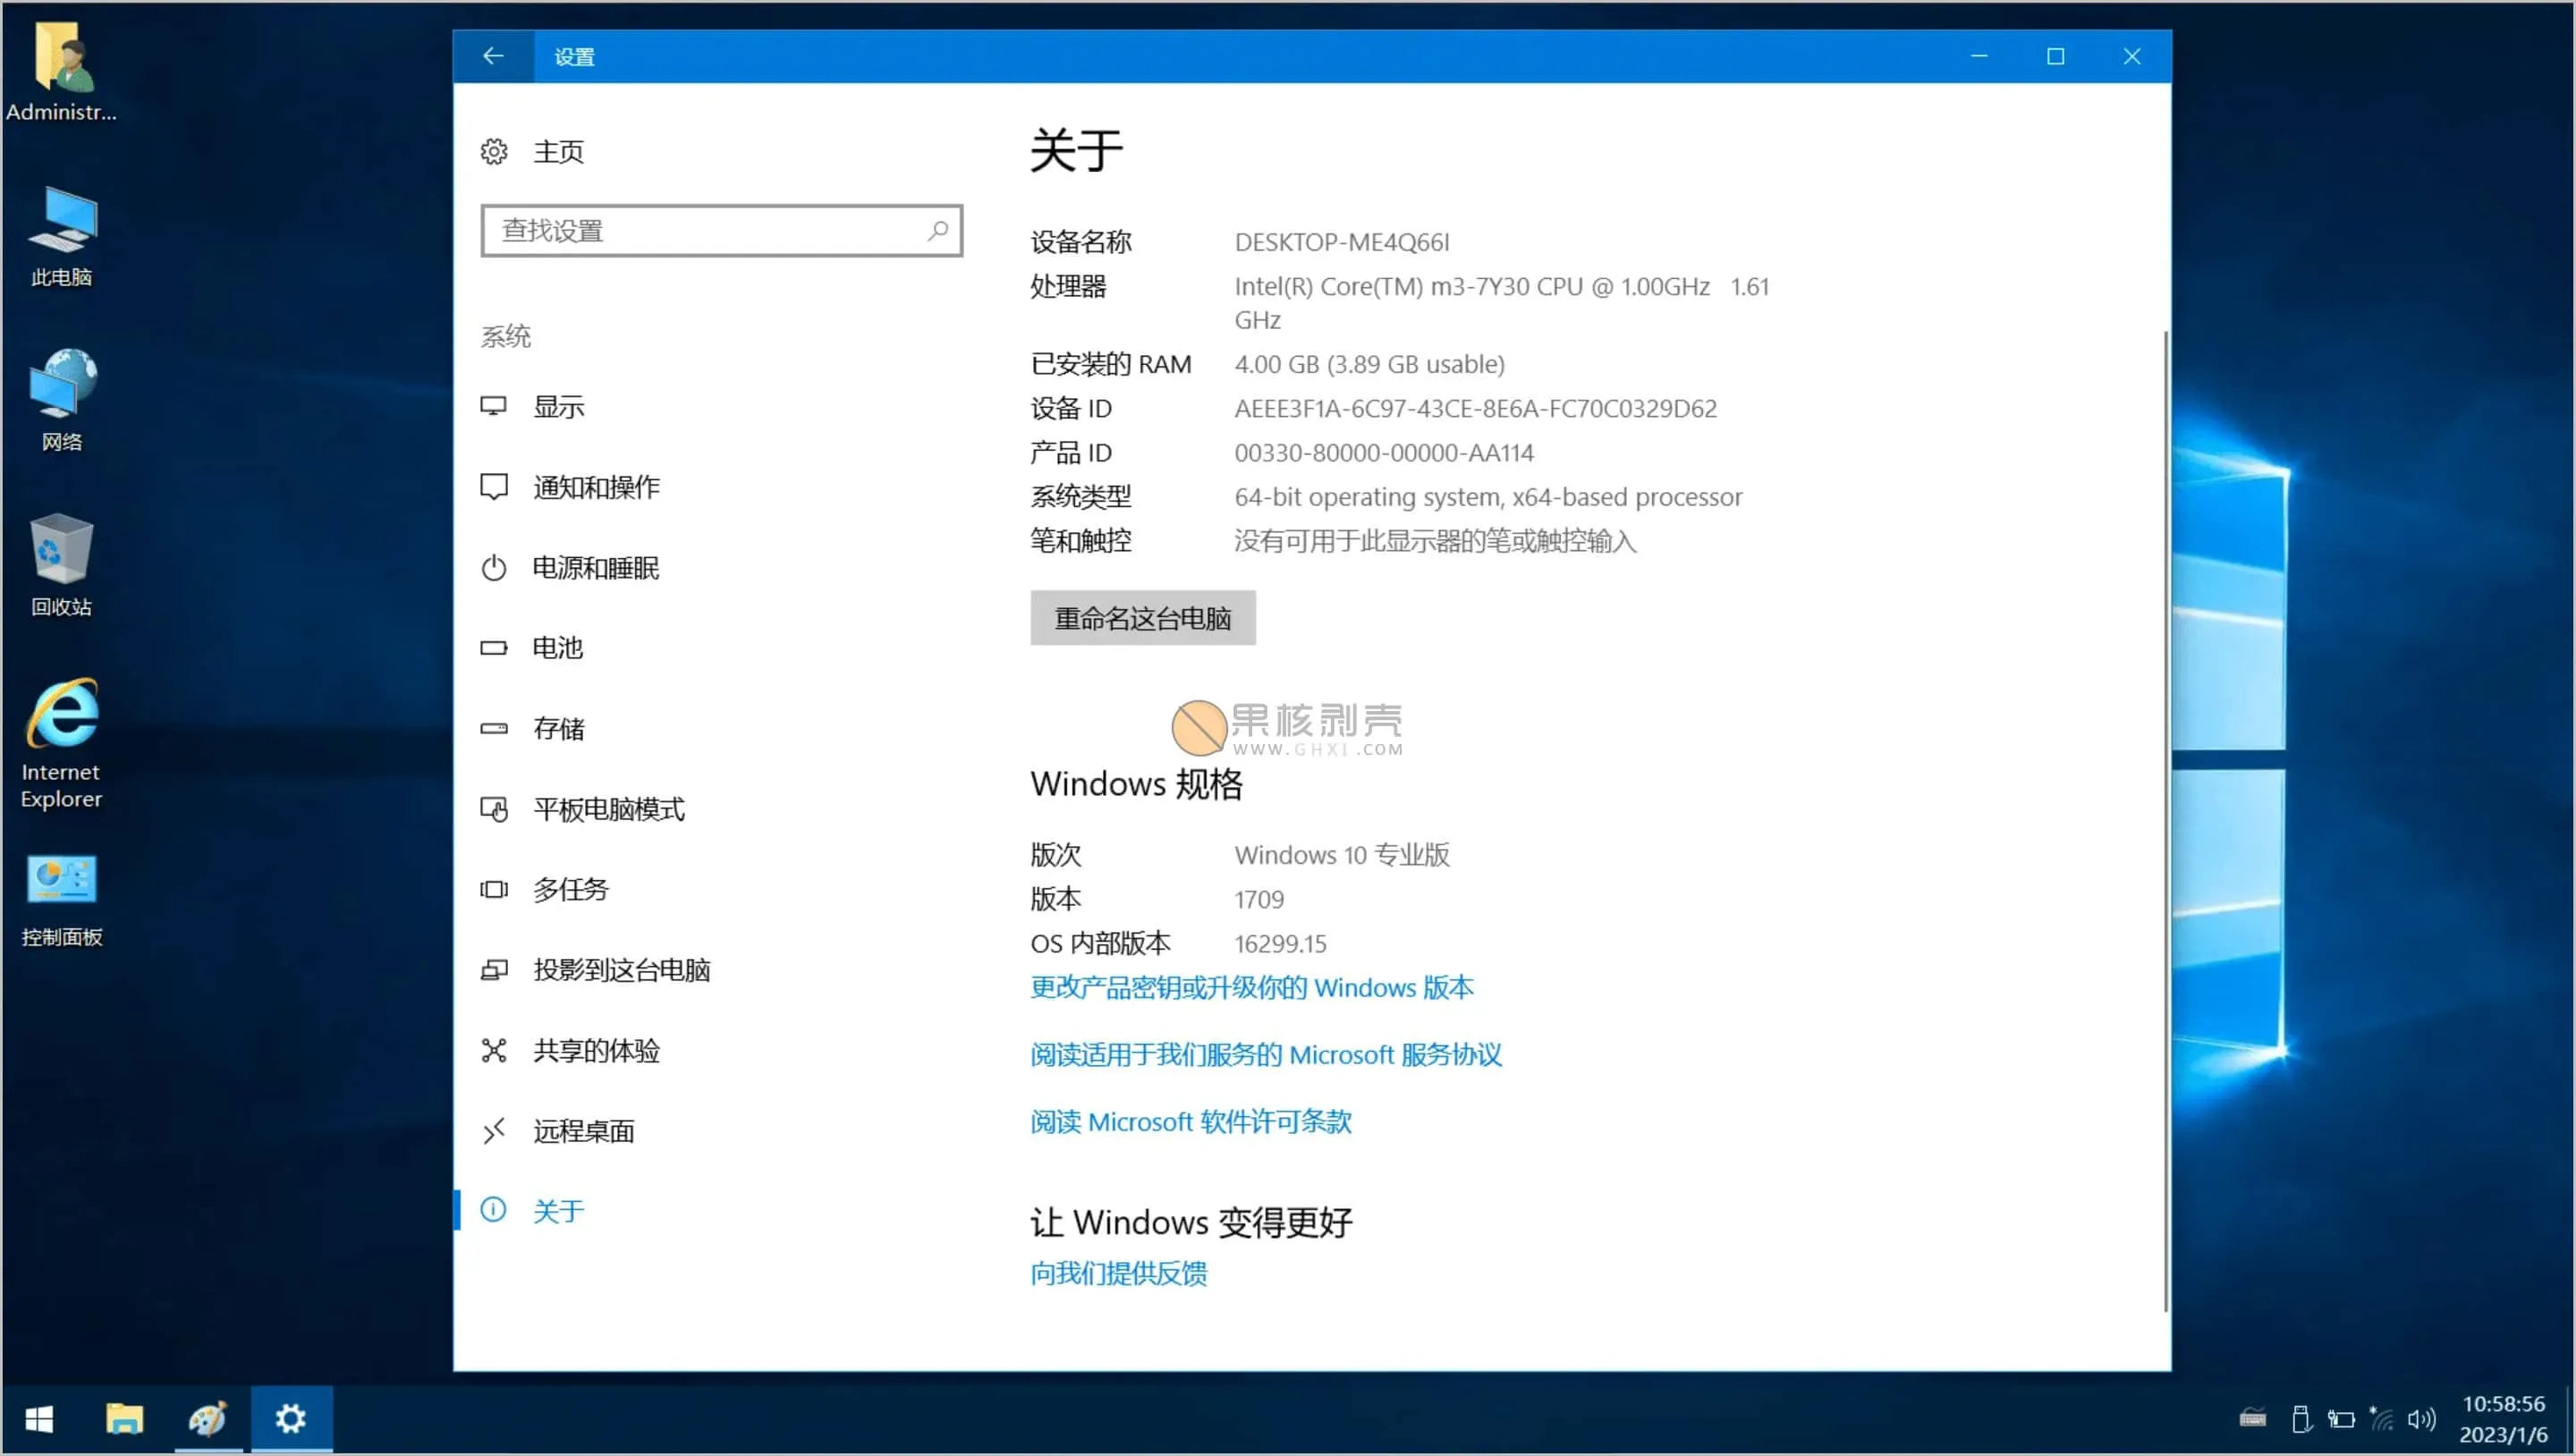 Windows 10 1709 极限精简版 - 果核剥壳